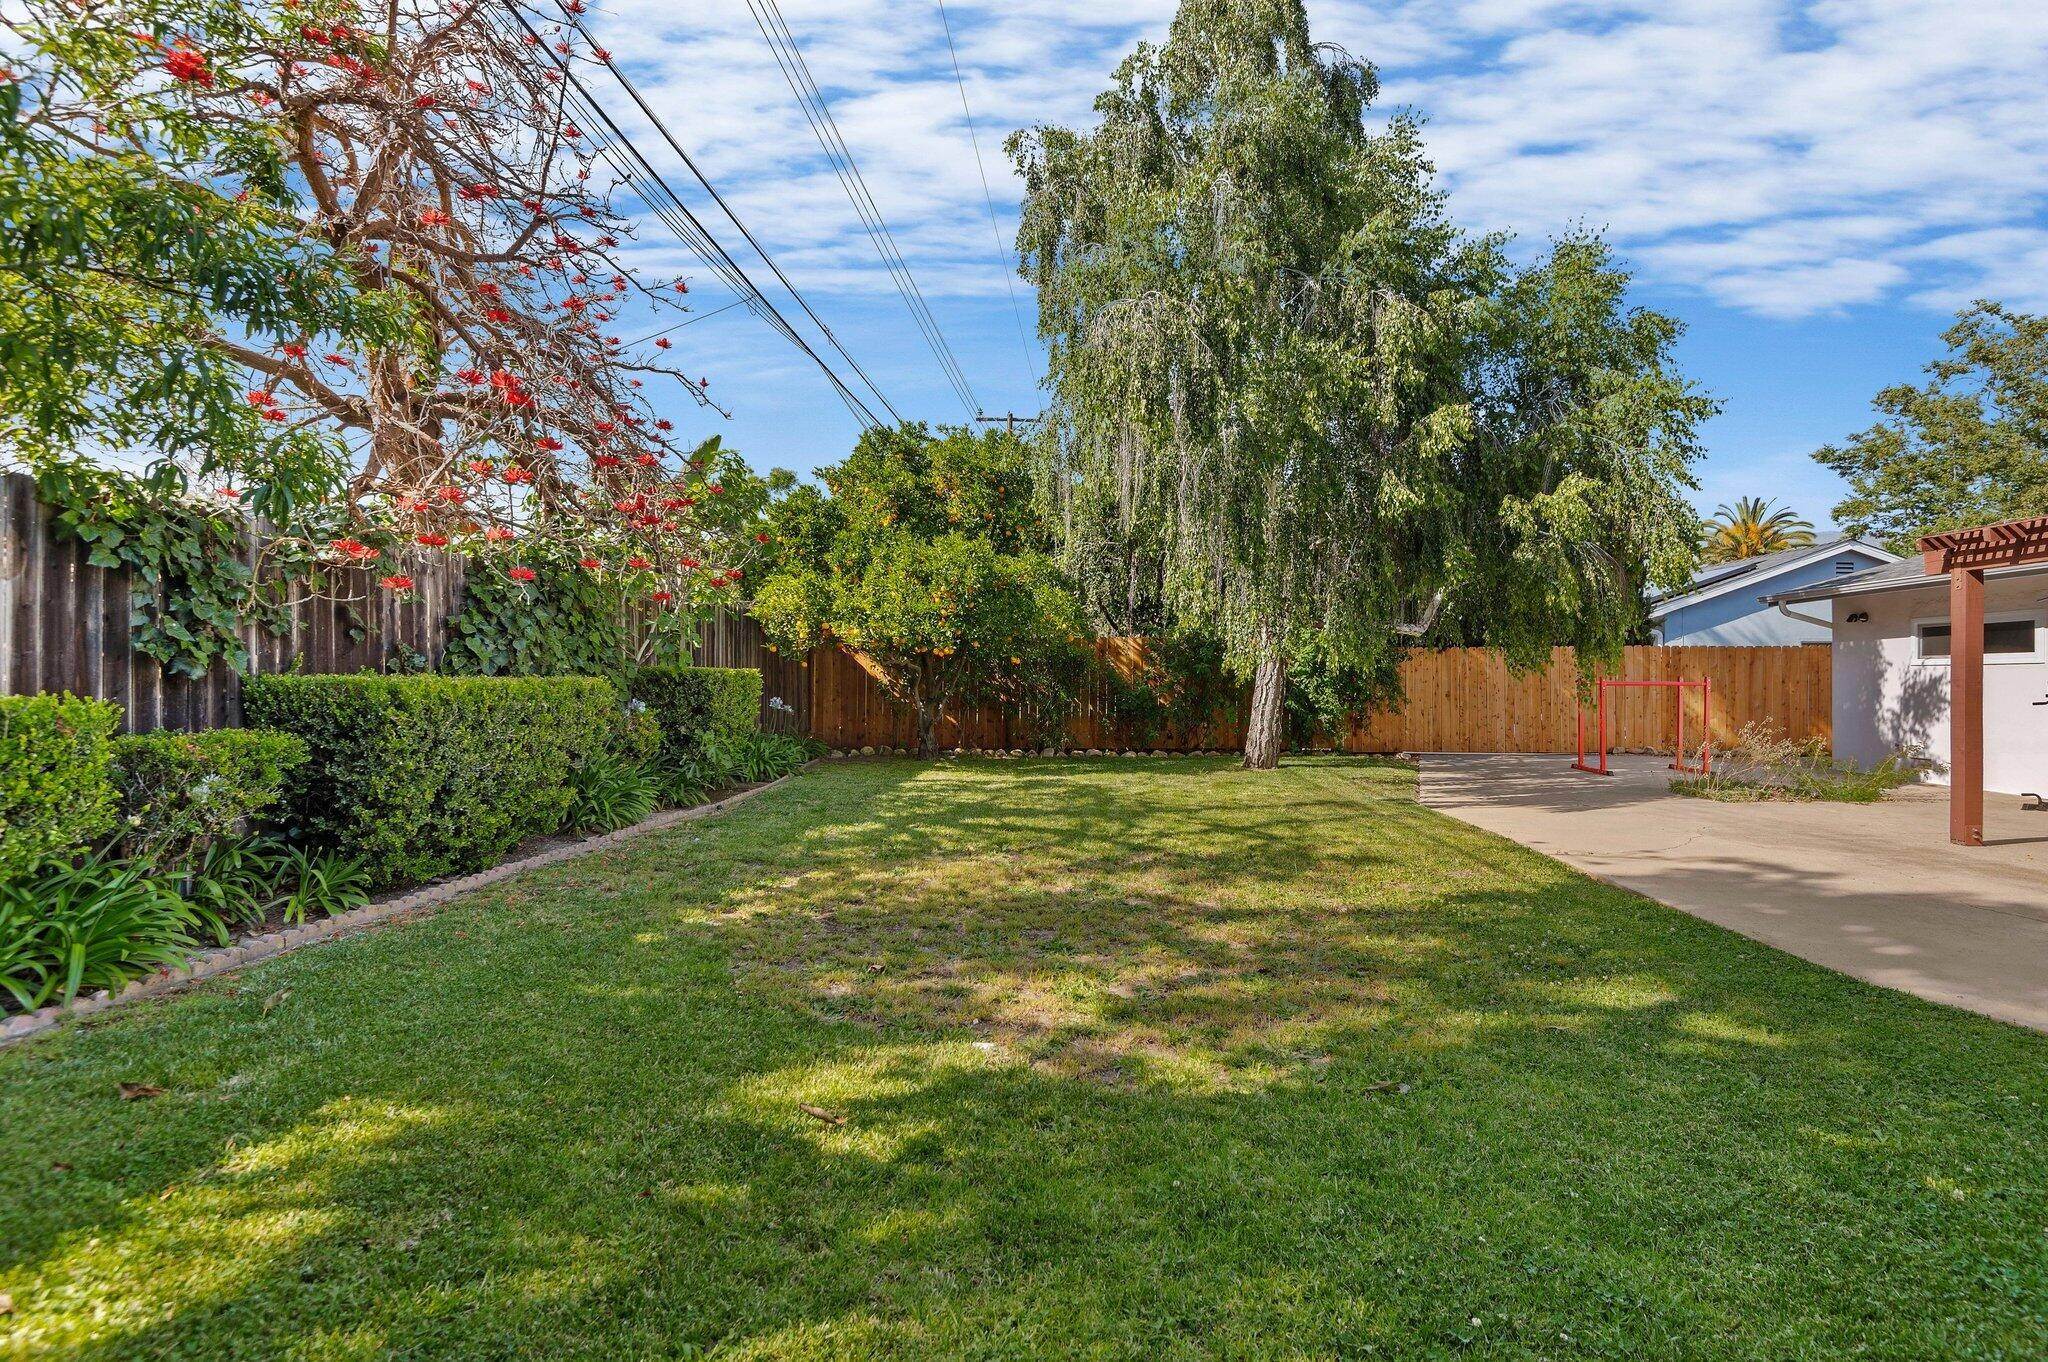 17. Estate for Sale at 361 Apple Grove Lane Santa Barbara, California 93105 United States